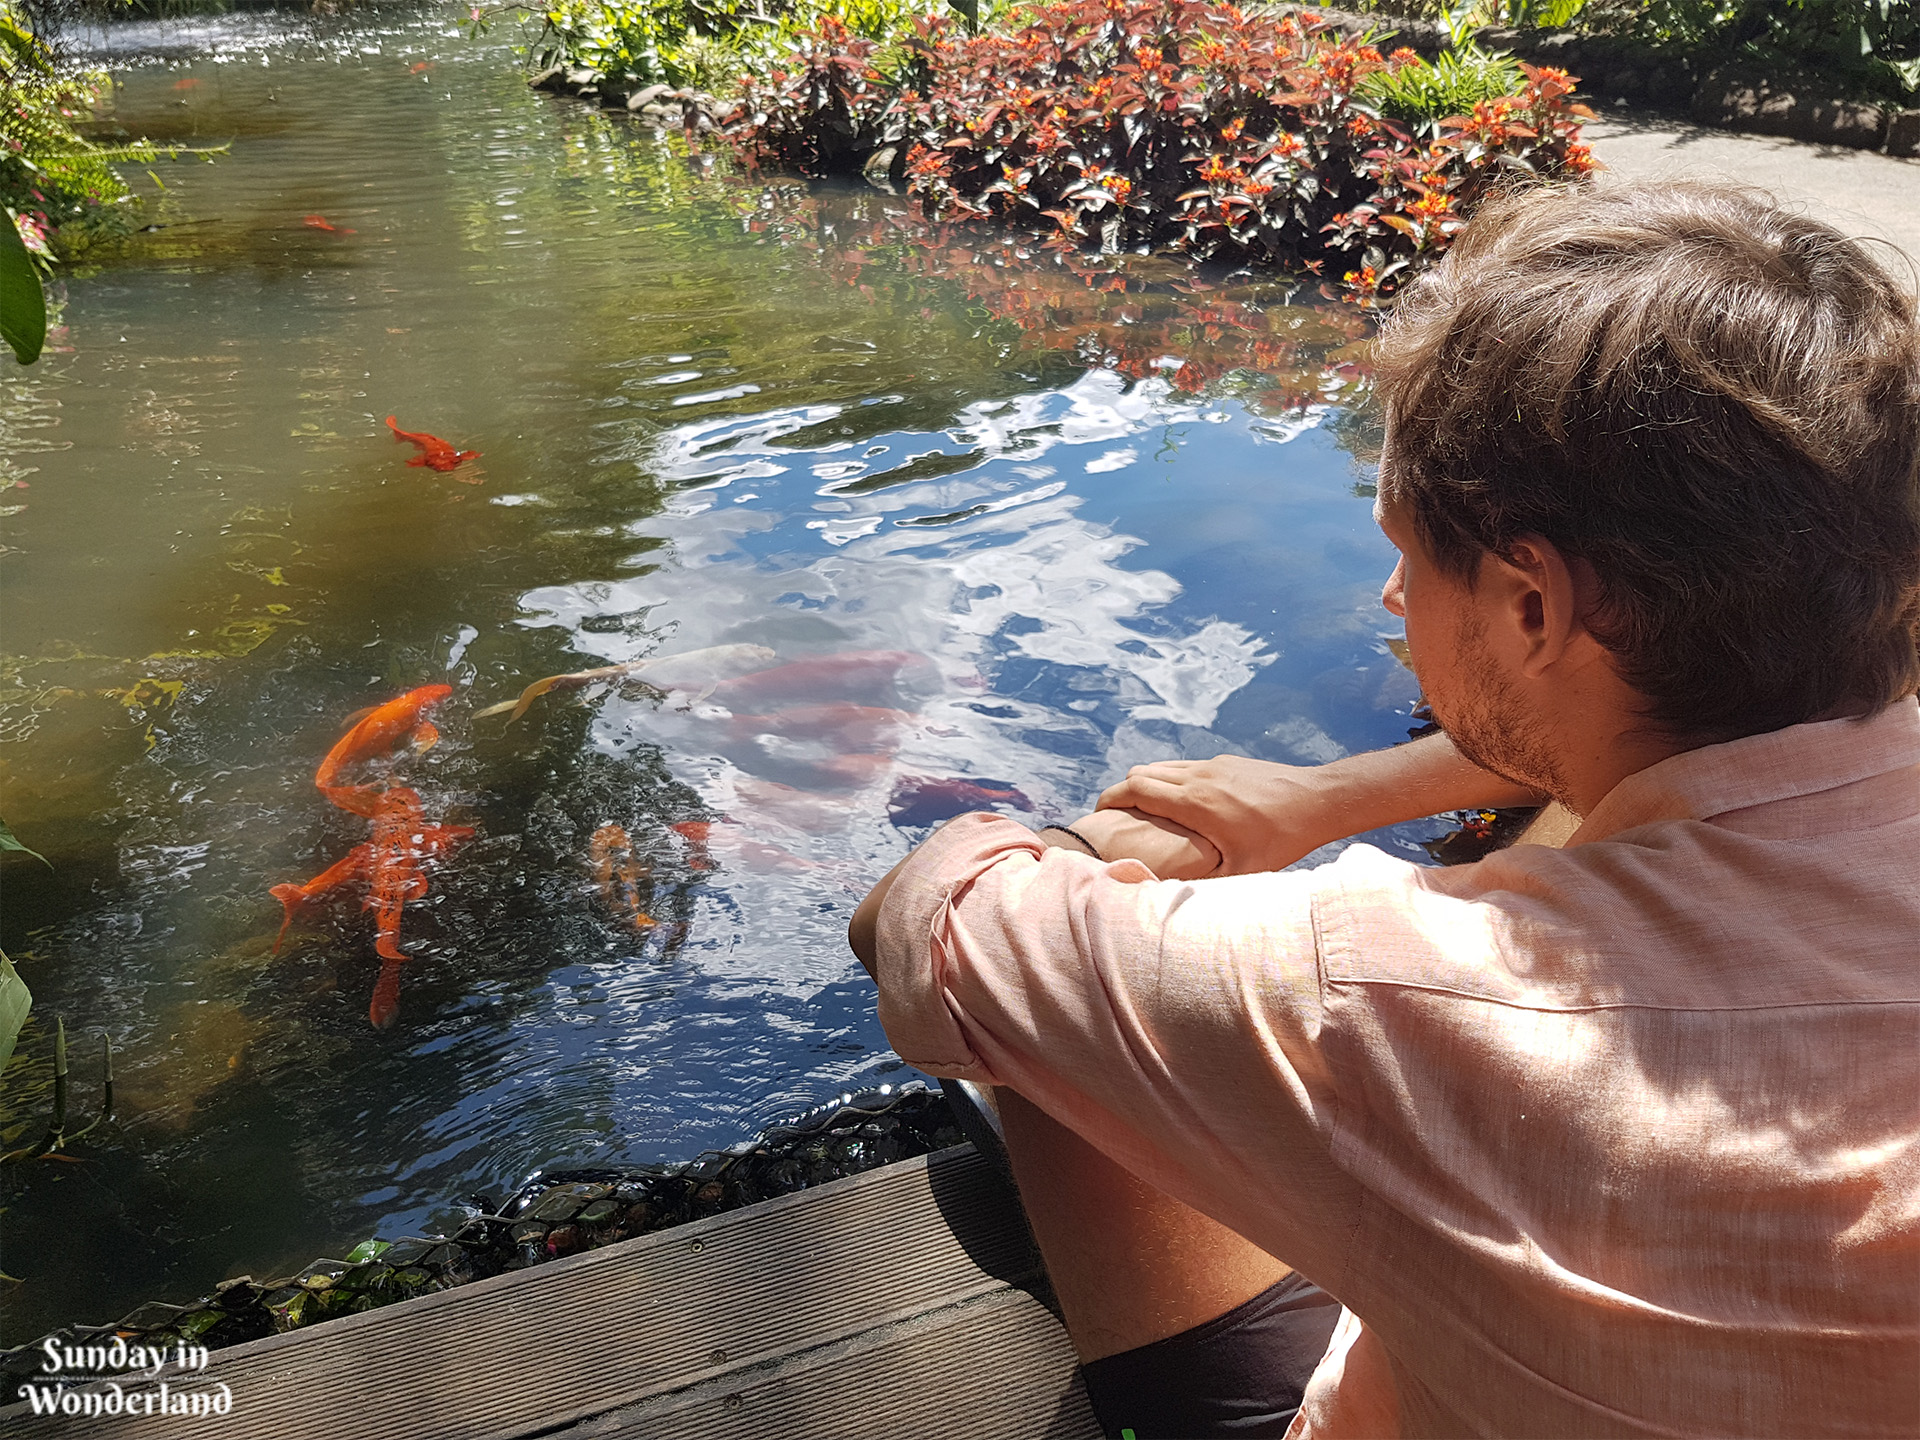 A man watching Koi carps in Botanical Garden in Deshaies in Guadeloupe - Sunday in Wonderland Blog